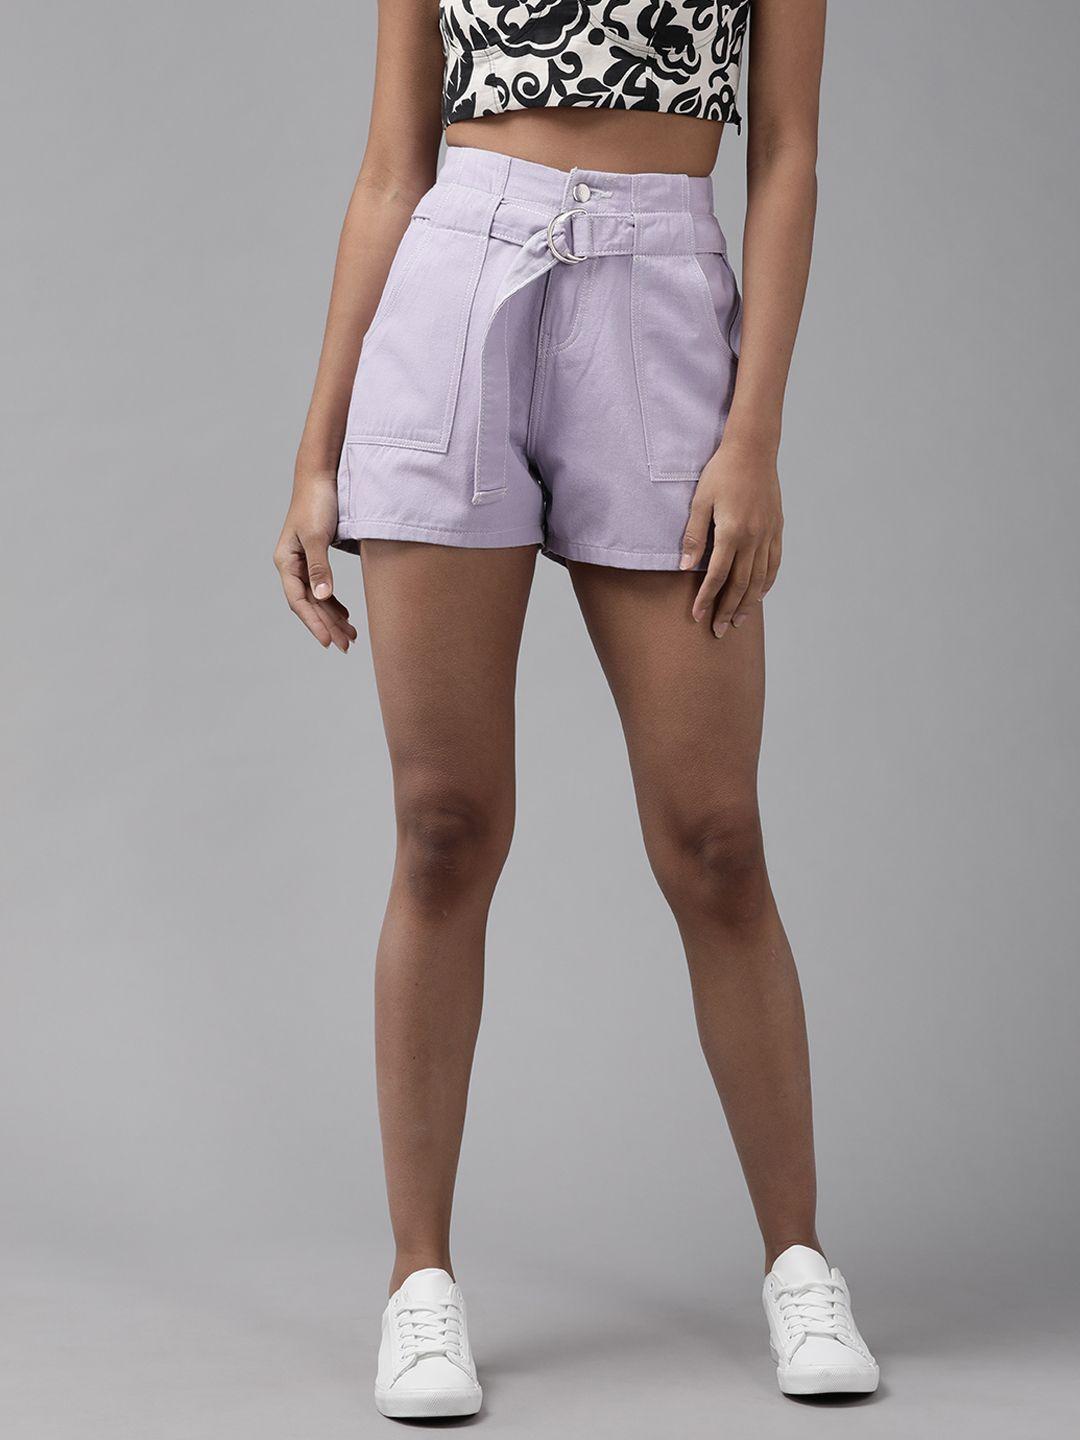 kassually women lavender high-rise denim shorts